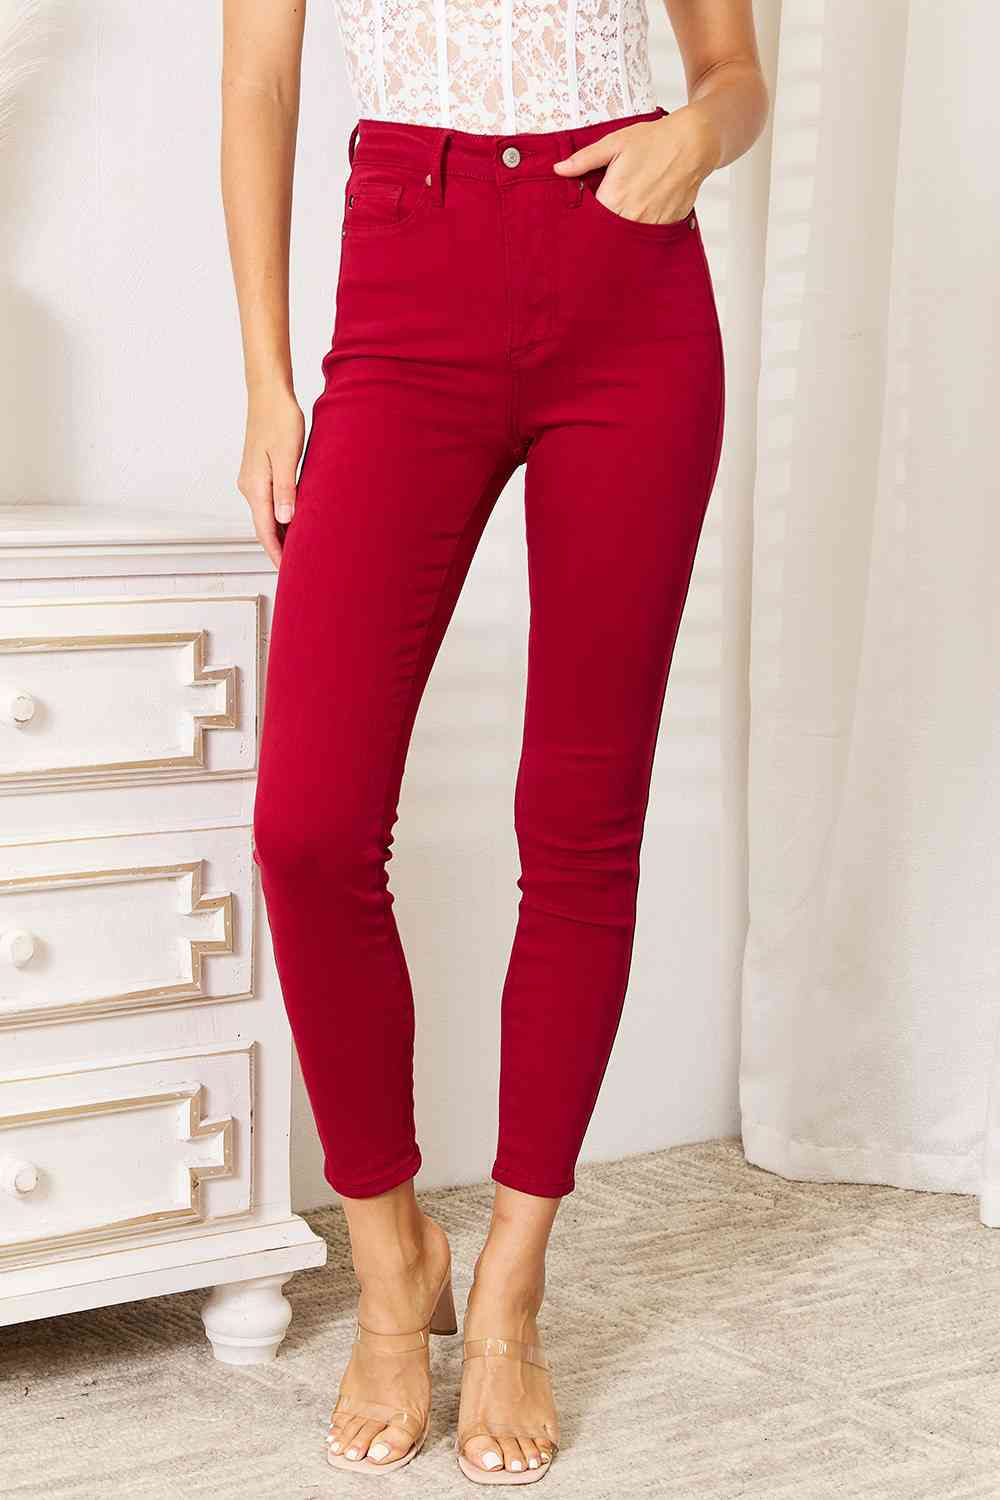 Judy Blue Scarlet High Waist Tummy Control Skinny Jeans Red High Waist Tummy Control Jeans by Vim&Vigor | Vim&Vigor Boutique